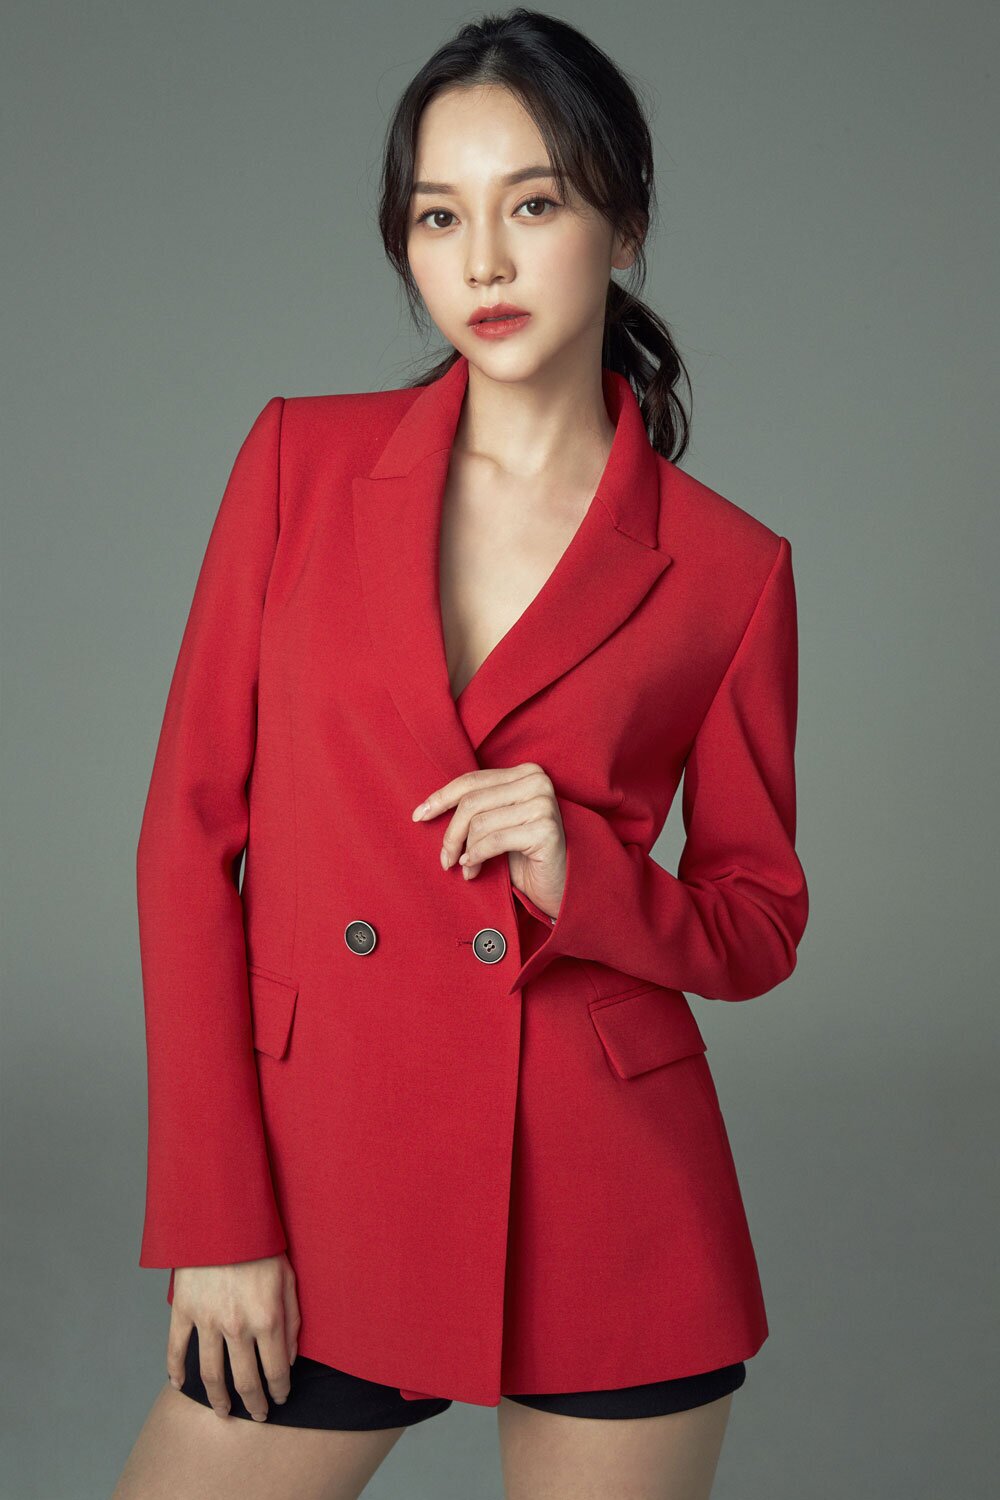 Lee Ayumi Bonboo Entertainment Profile Photos | kpopping